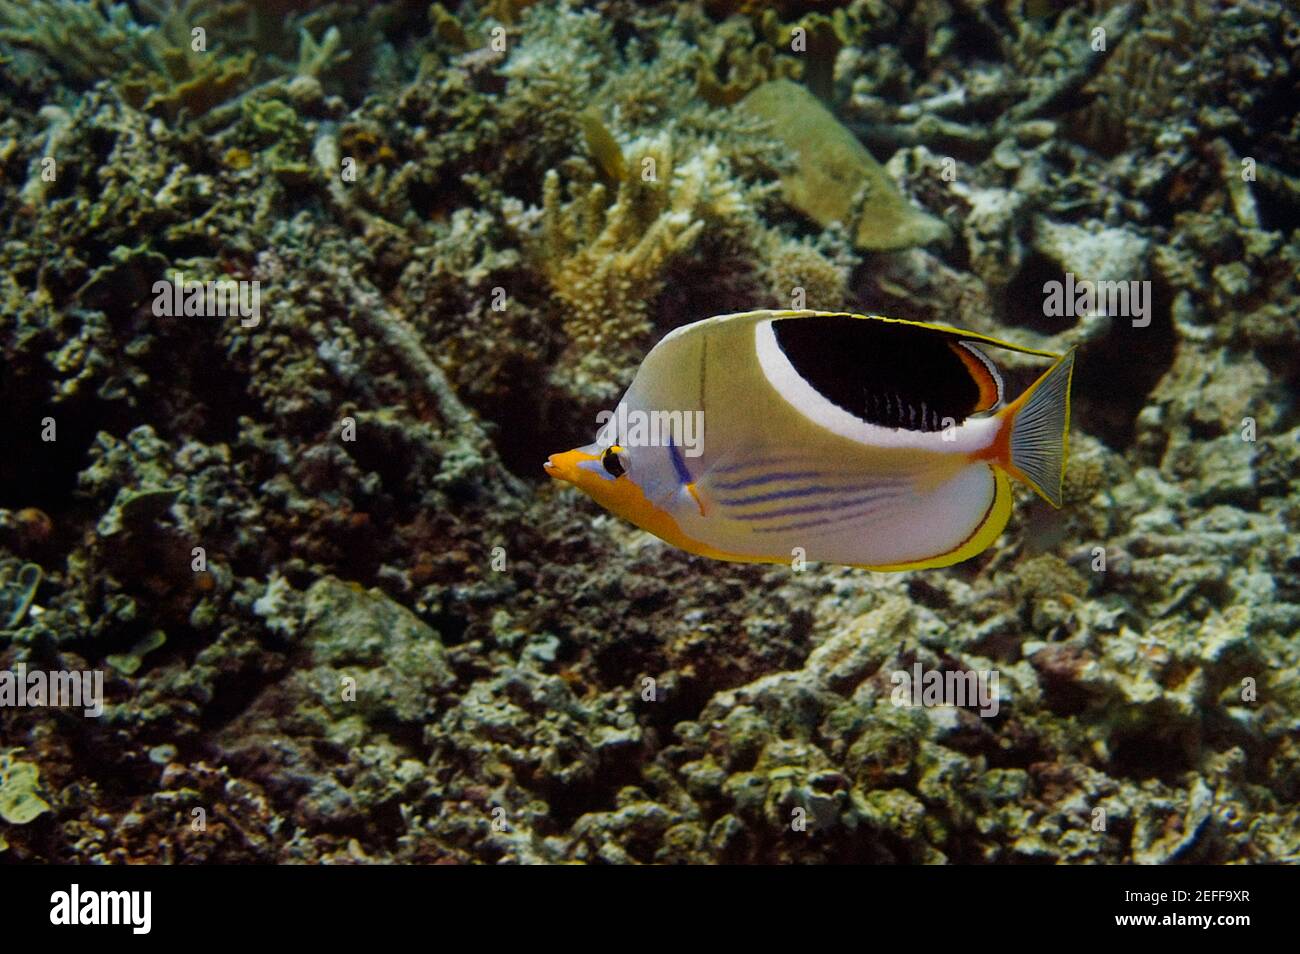 Saddled butterflyfish Chaetodon ephippium swimming underwater, Papua New Guinea Stock Photo